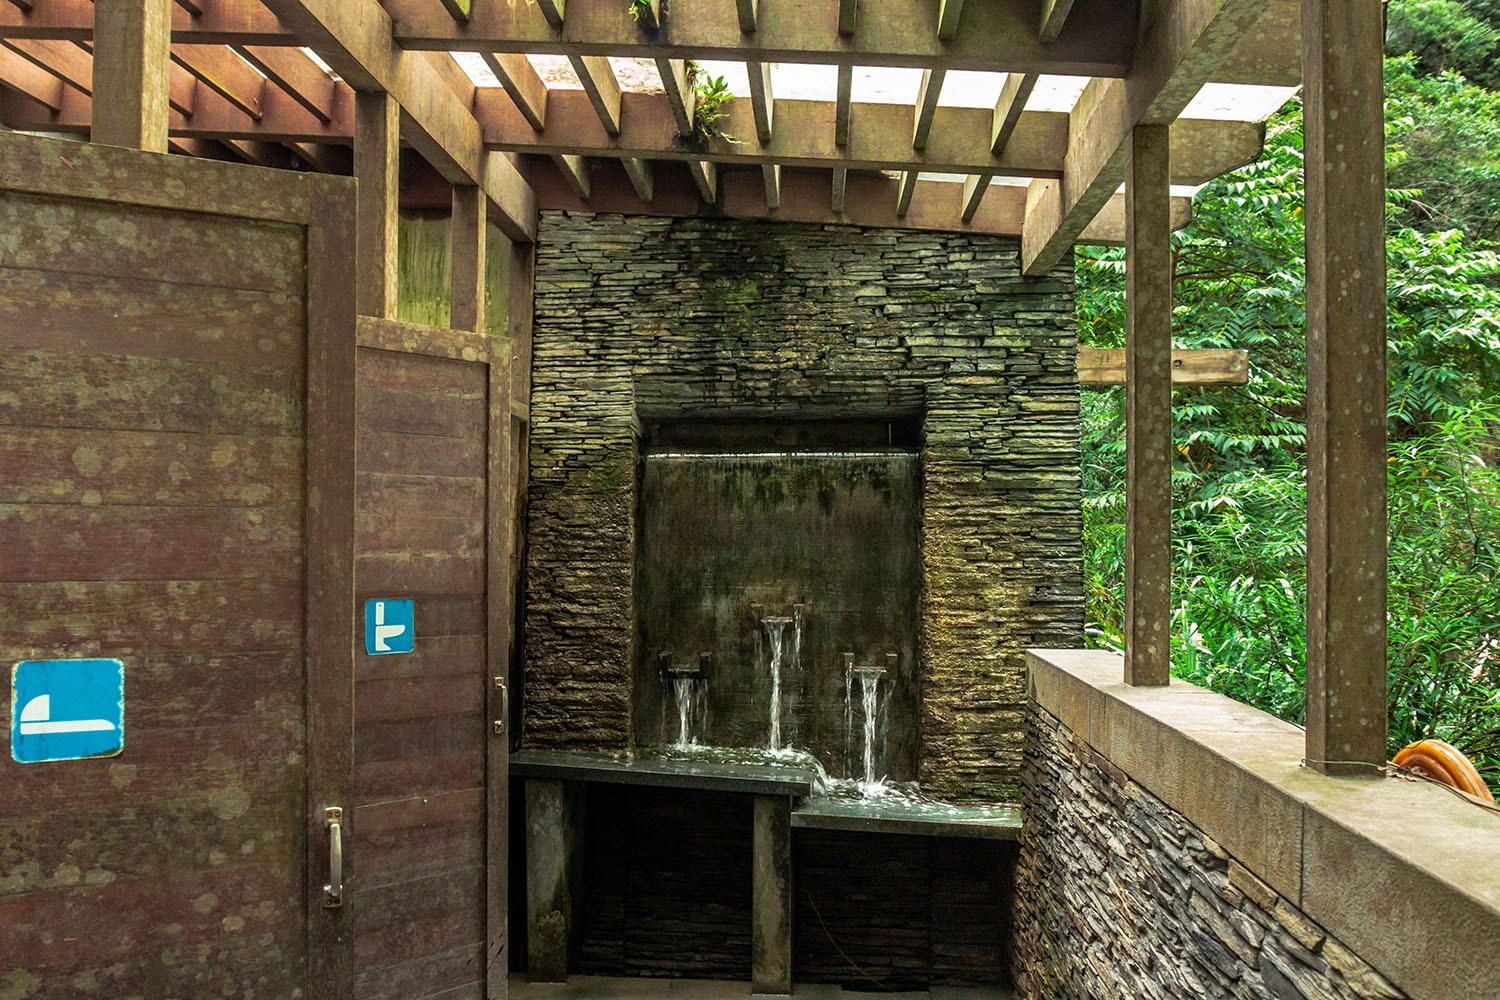 This washroom taps its water from a waterfall in Baiyang Trail in Taroko National Park, Taiwan